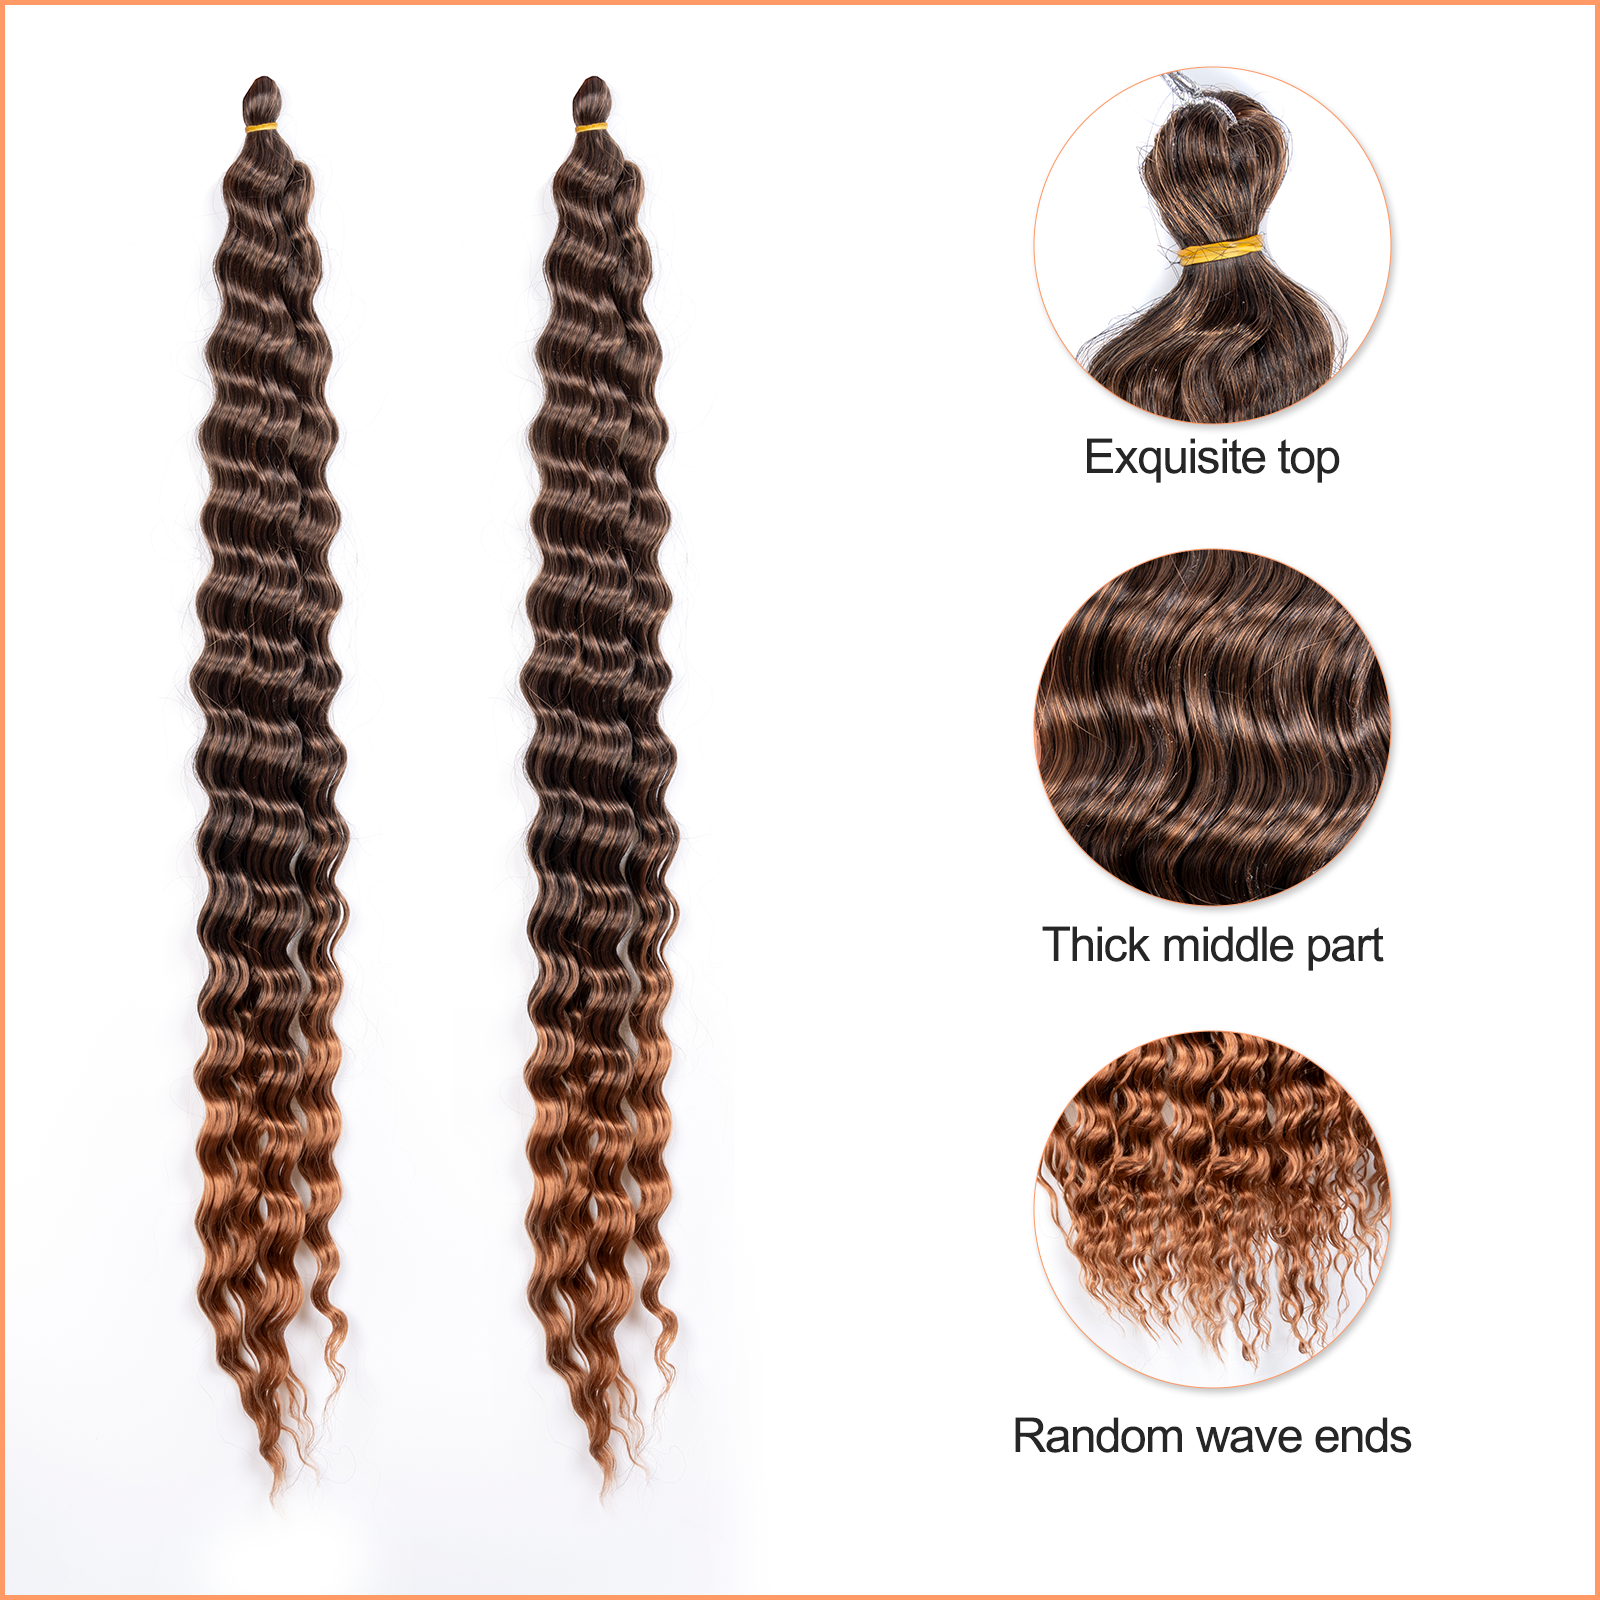 𝕷𝖎𝖇𝖗𝖆 | Ocean Wave Crochet Hair 30